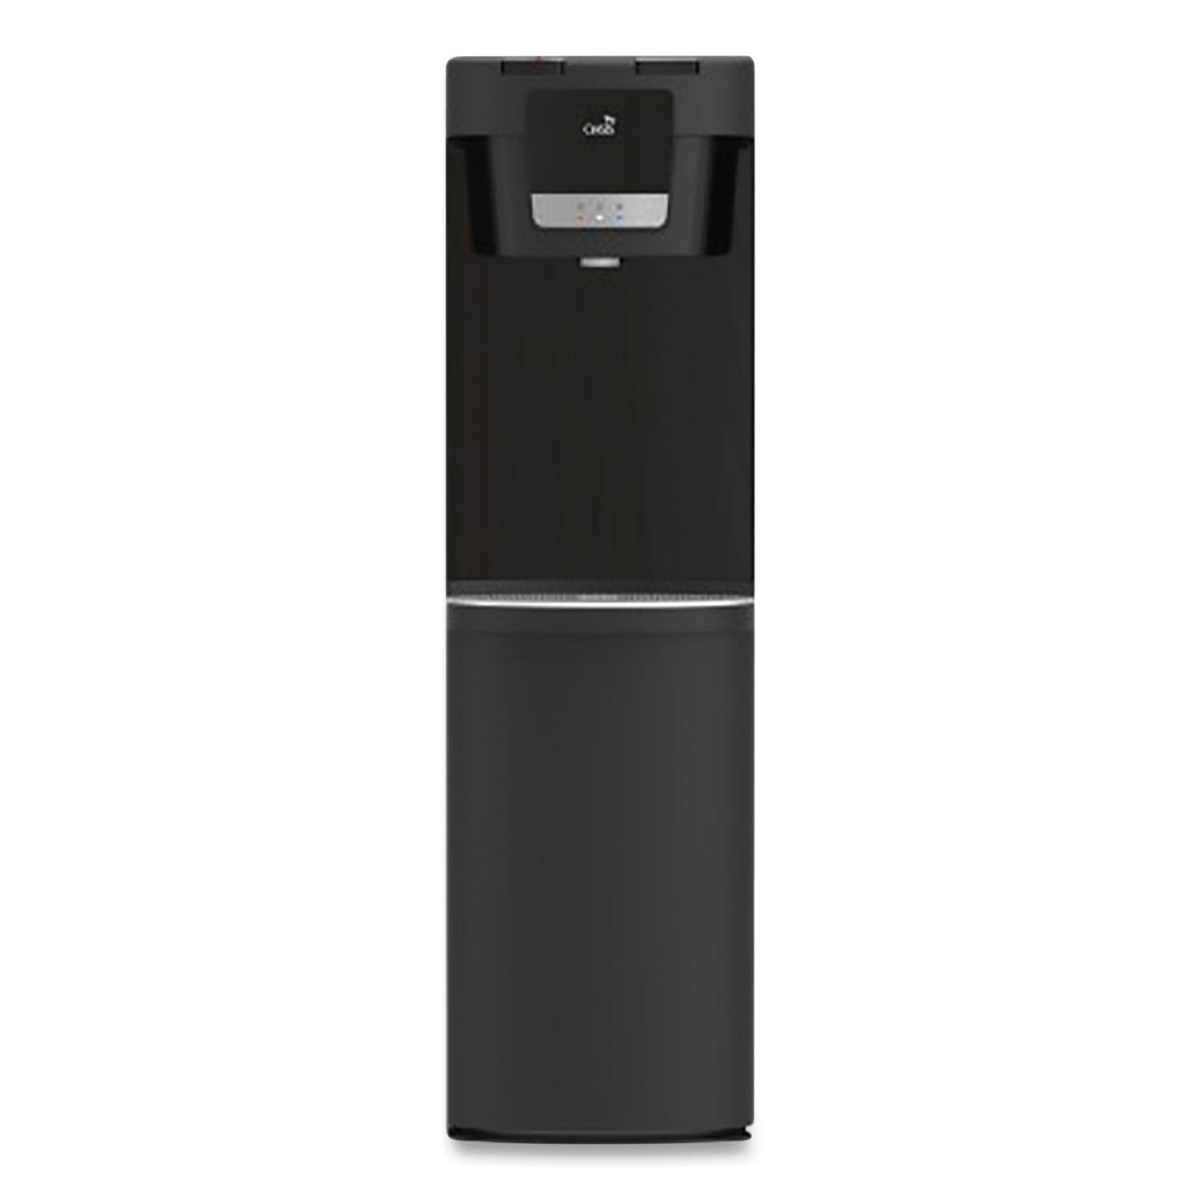 OAS506815C Maxxfill Flex Hot & Cold Water Dispenser - 2.11 gal - Black & Stainless Steel -  OASIS INTERNATIONAL